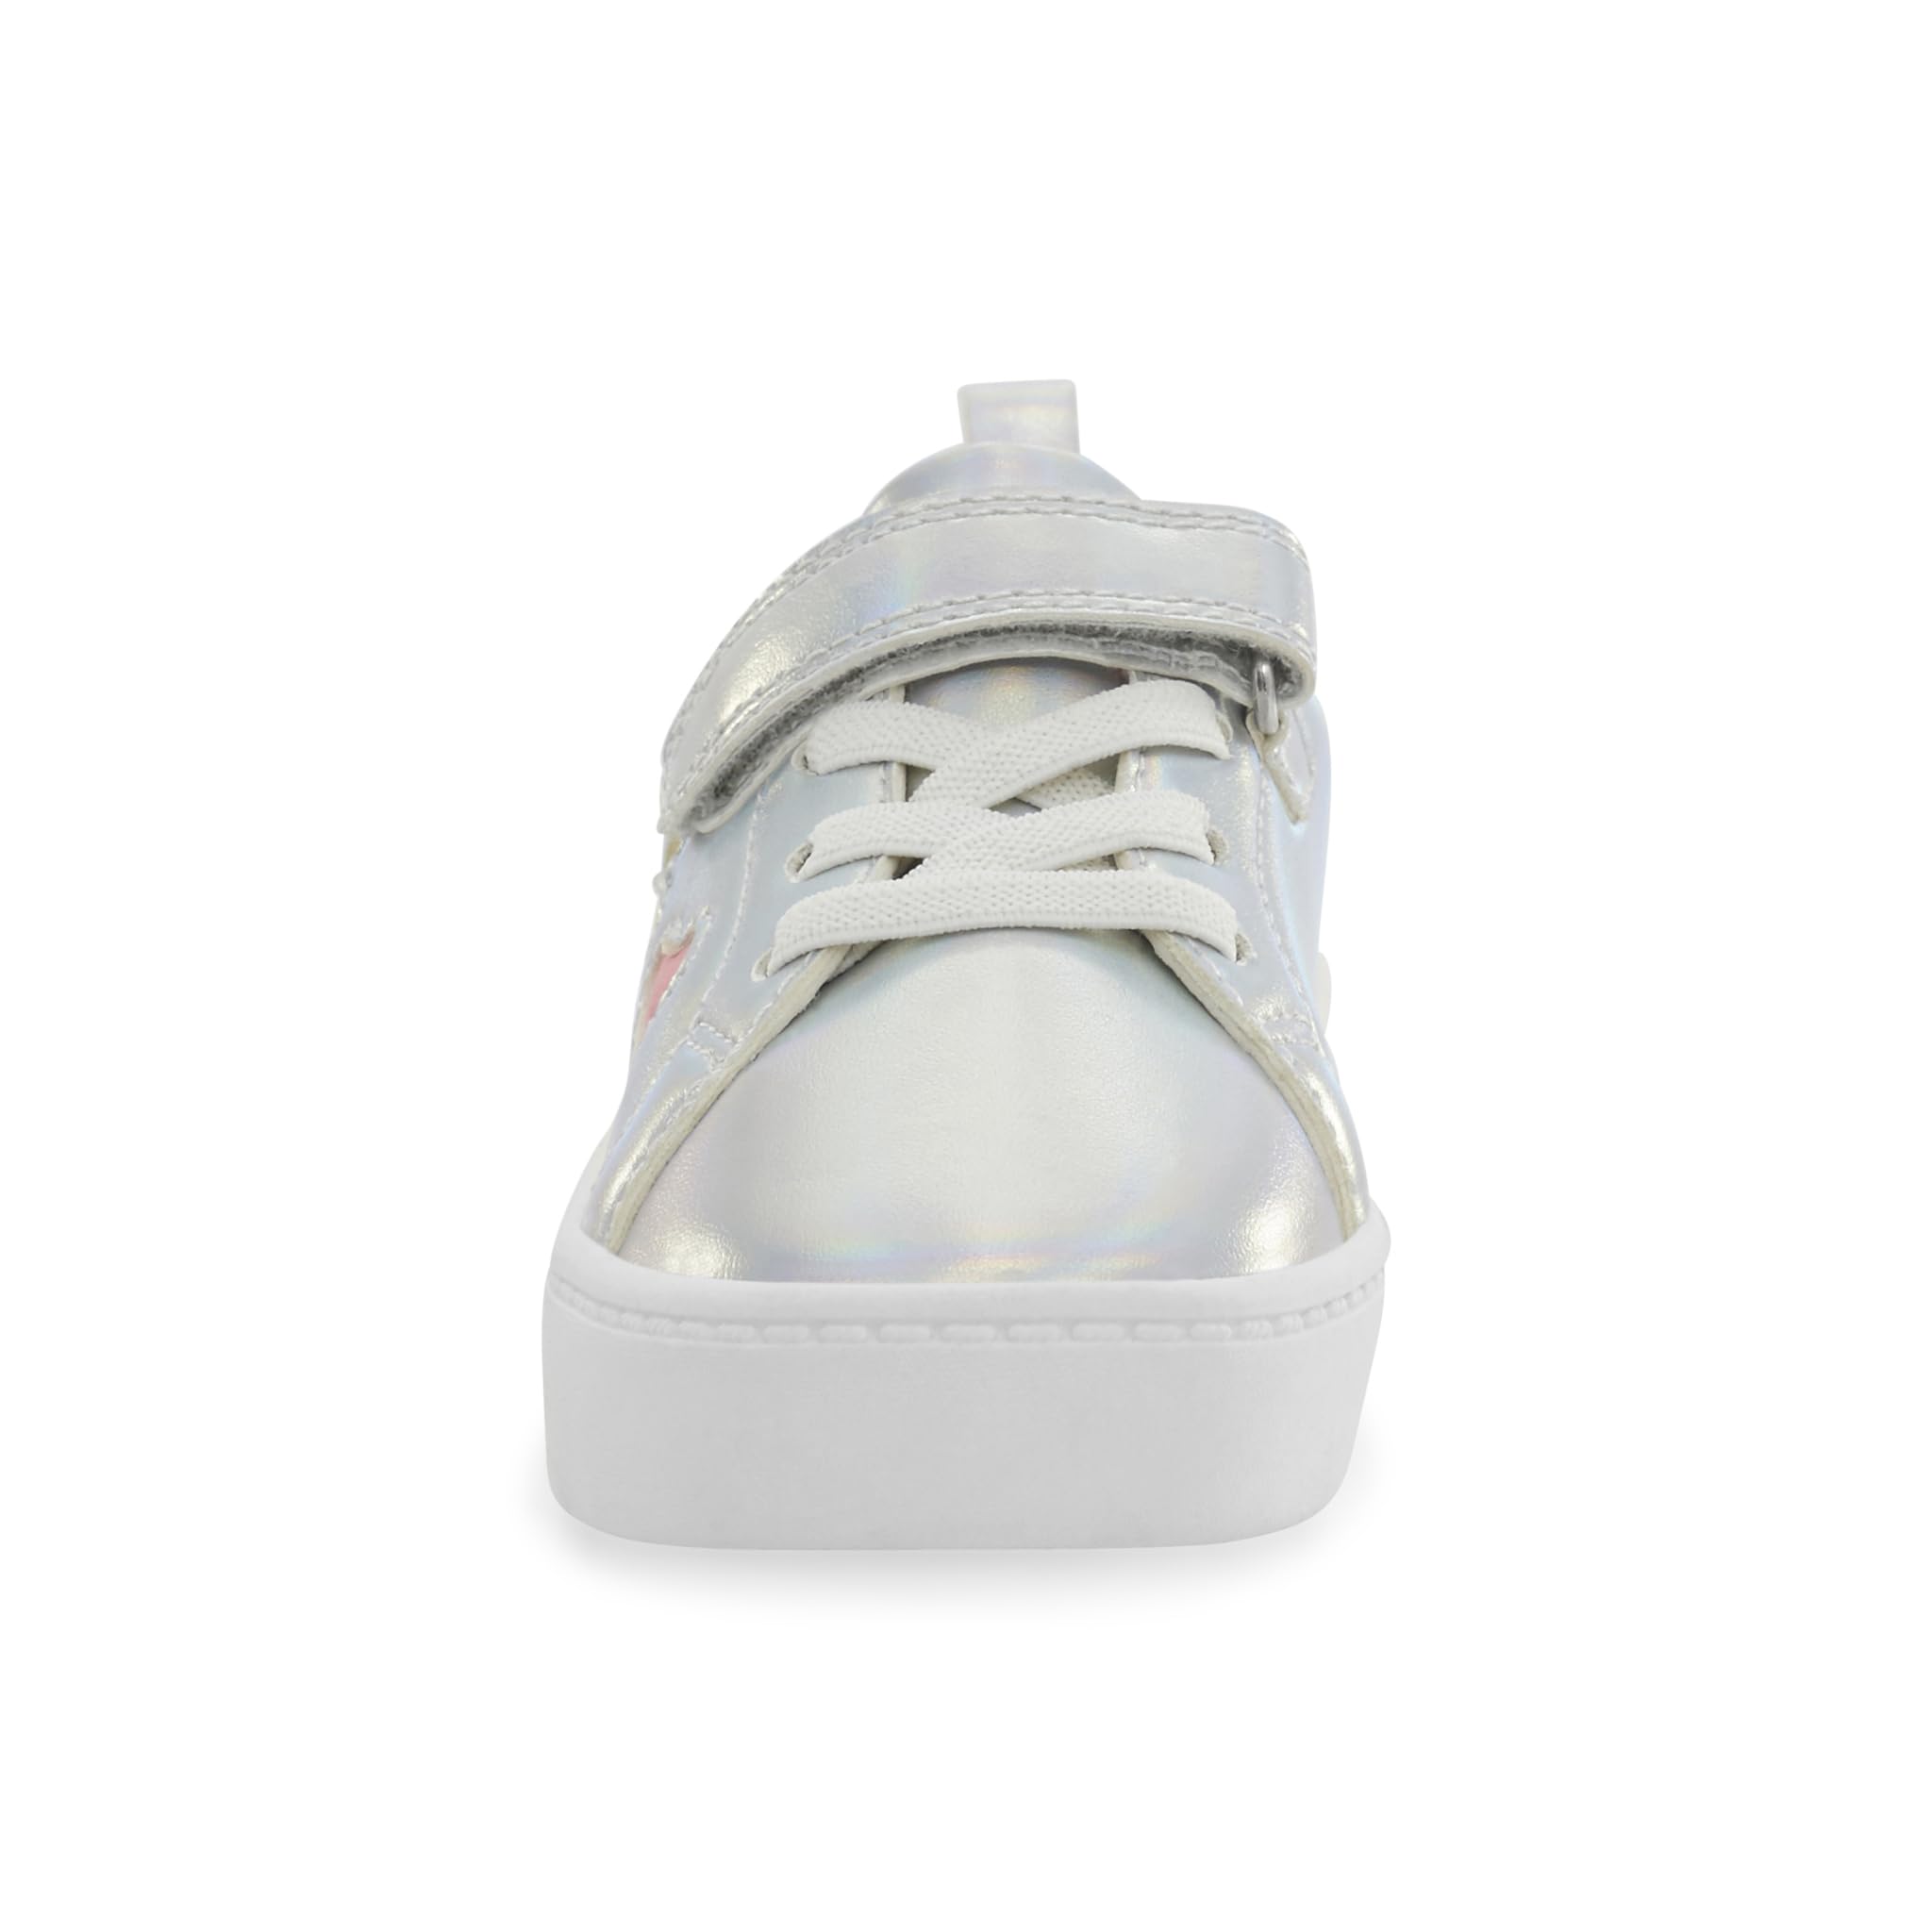 Carter's Unisex-Child Perrie Sneaker